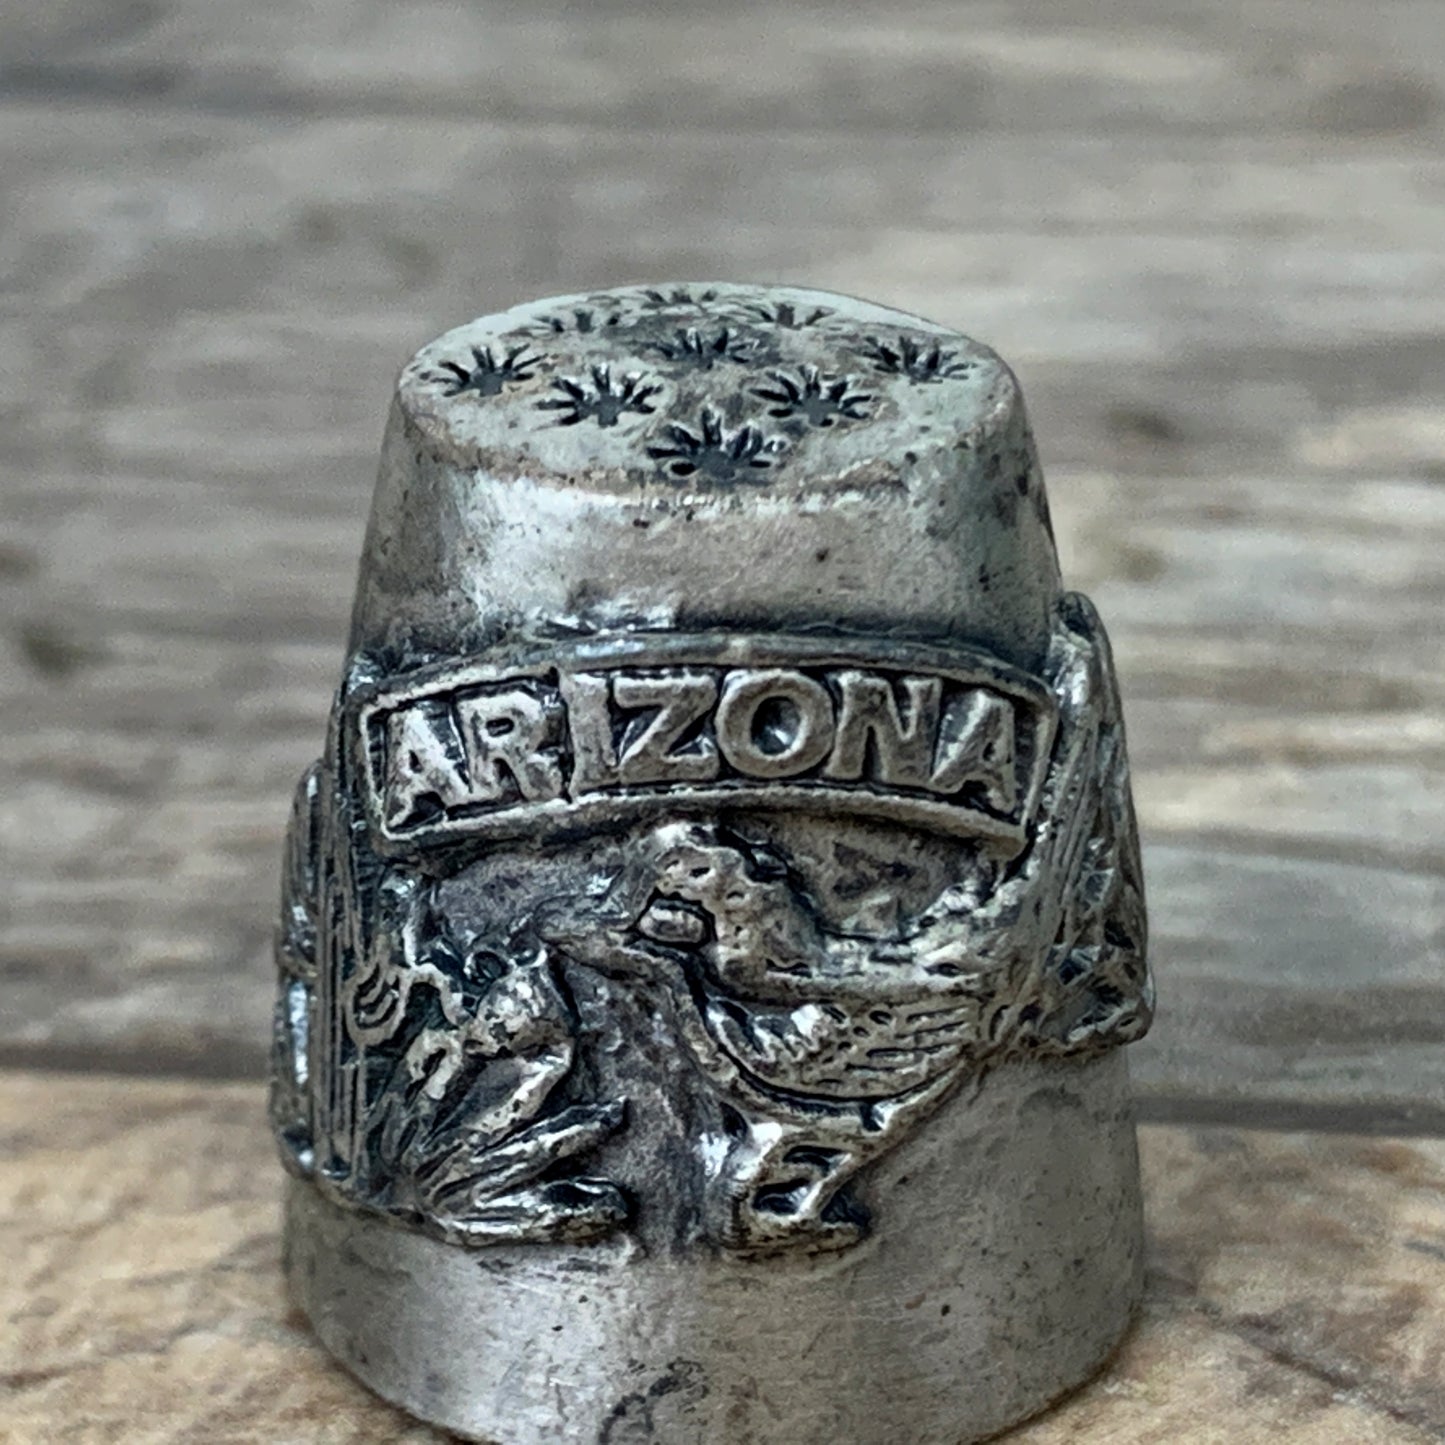 Arizona State Decorative Metal Thimble, Small Travel Souvenir